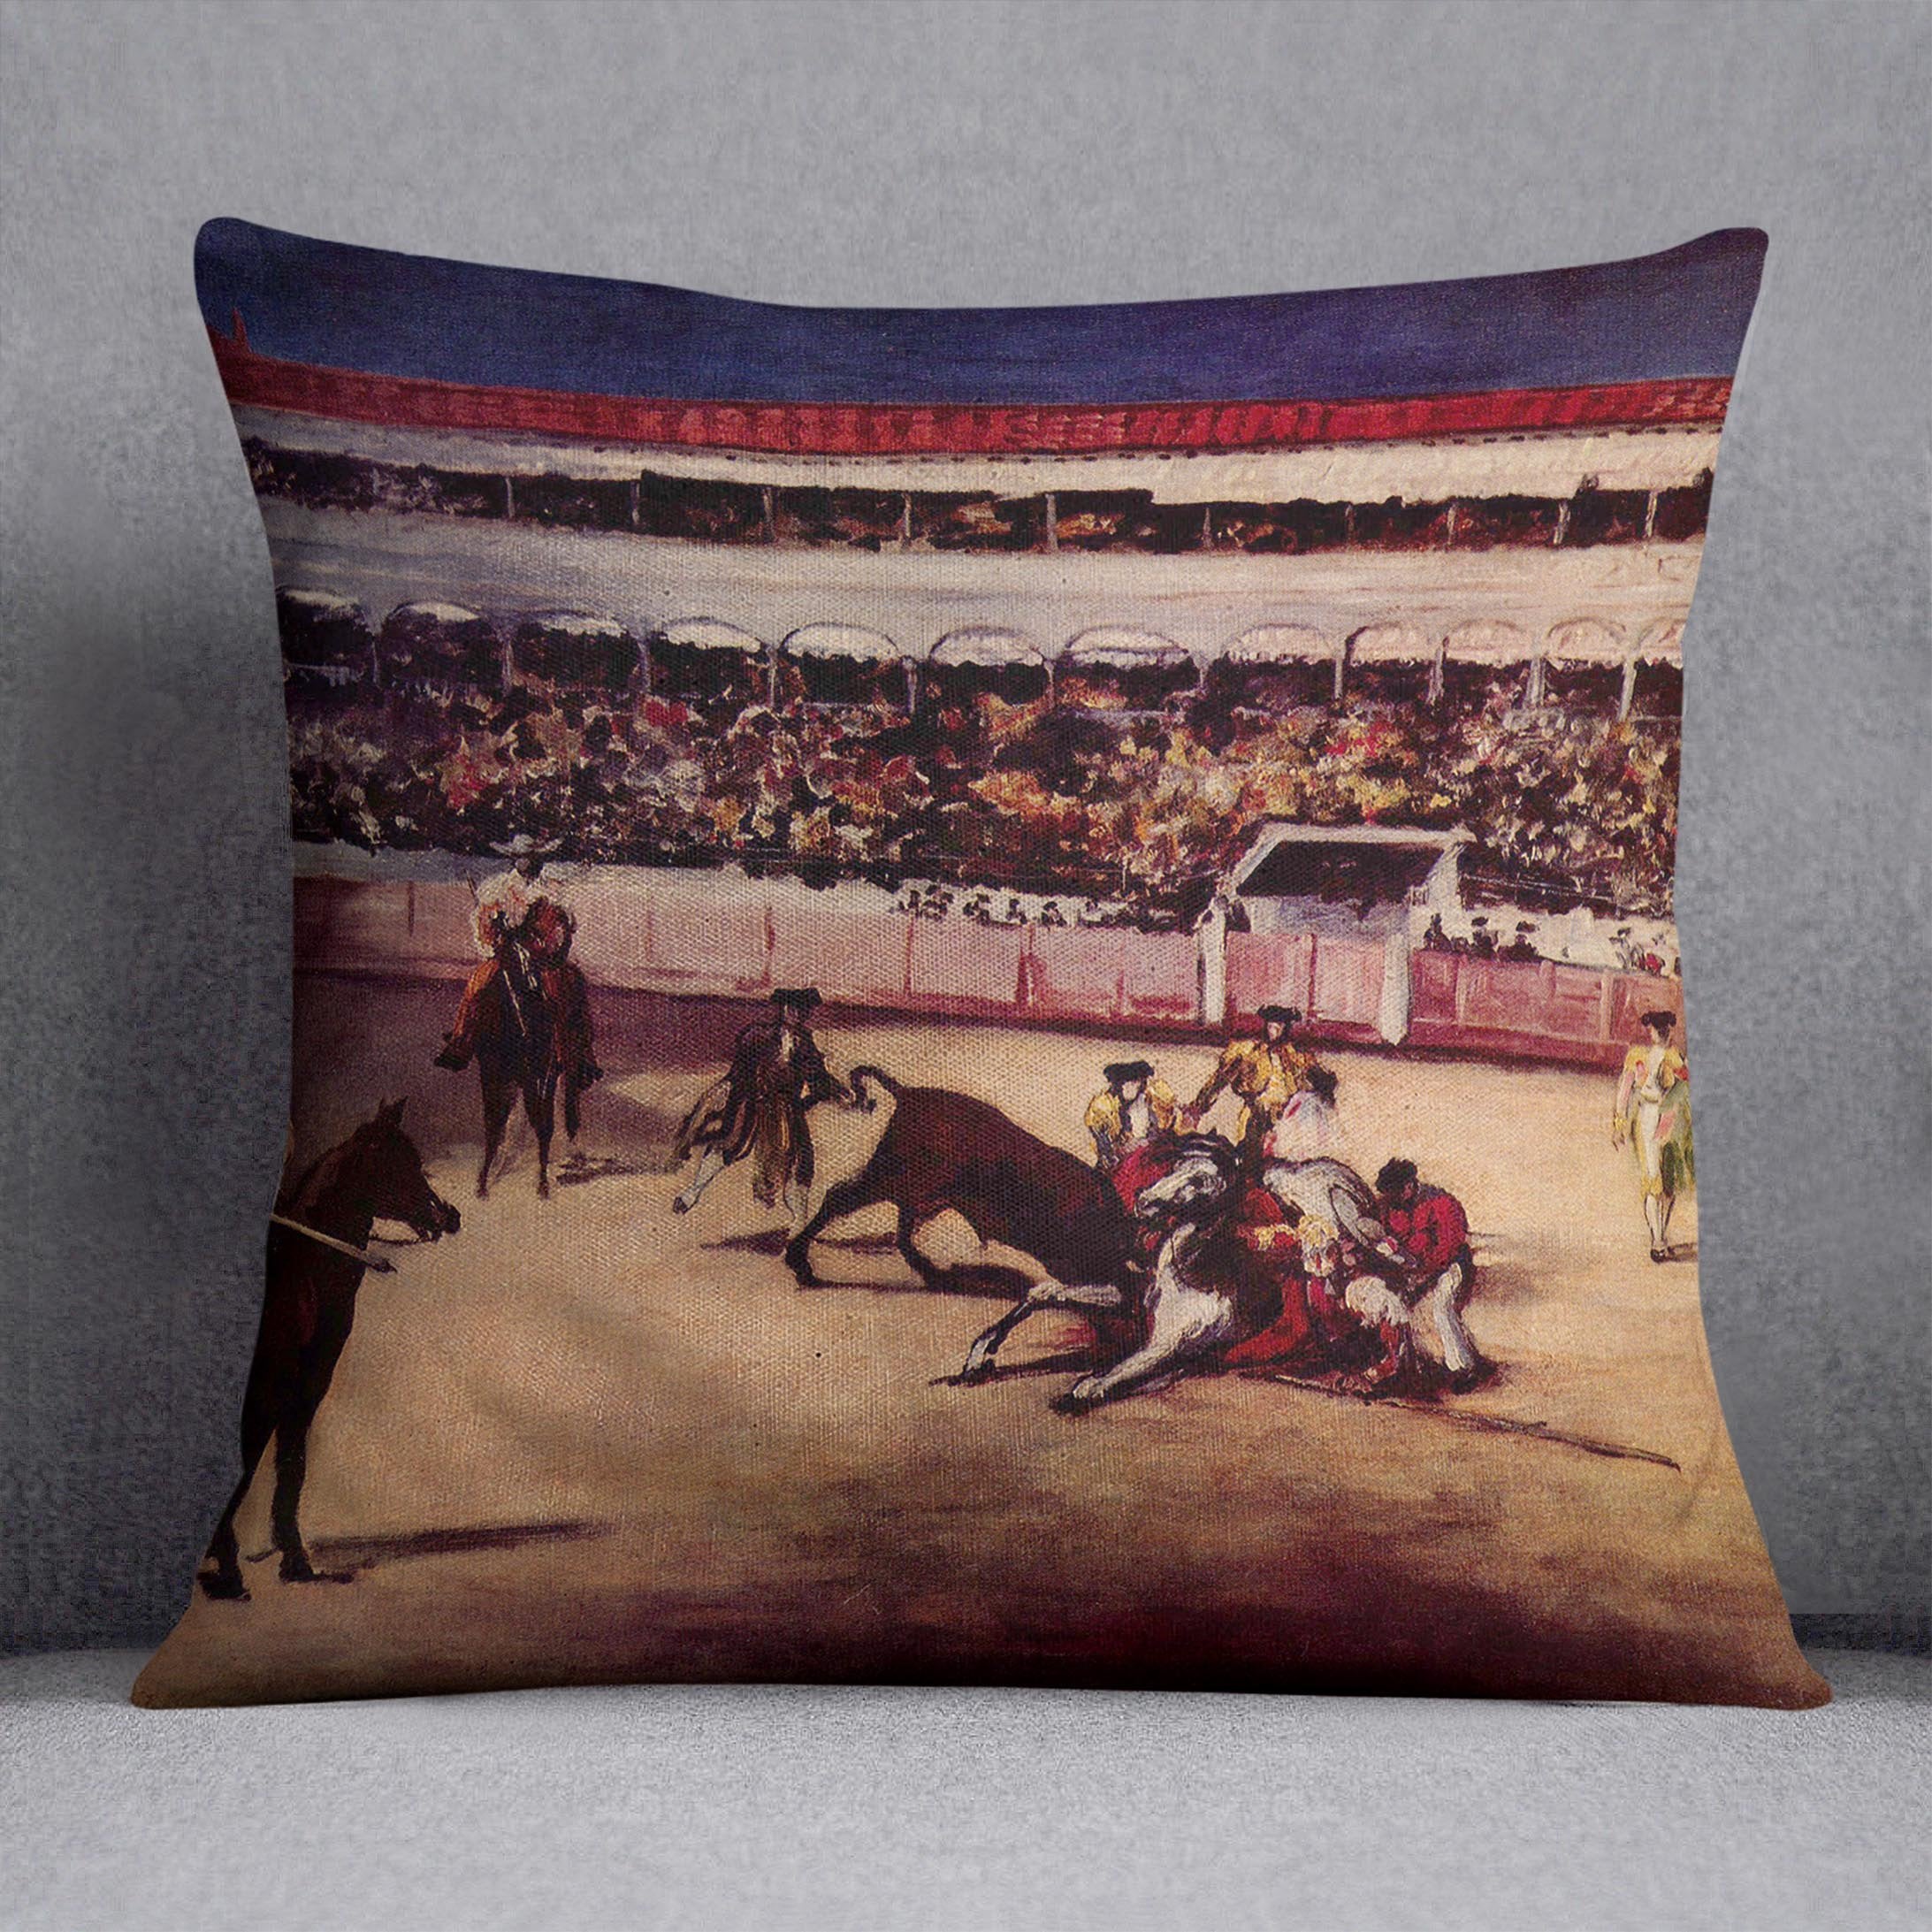 Bullfight by Manet Throw Pillow